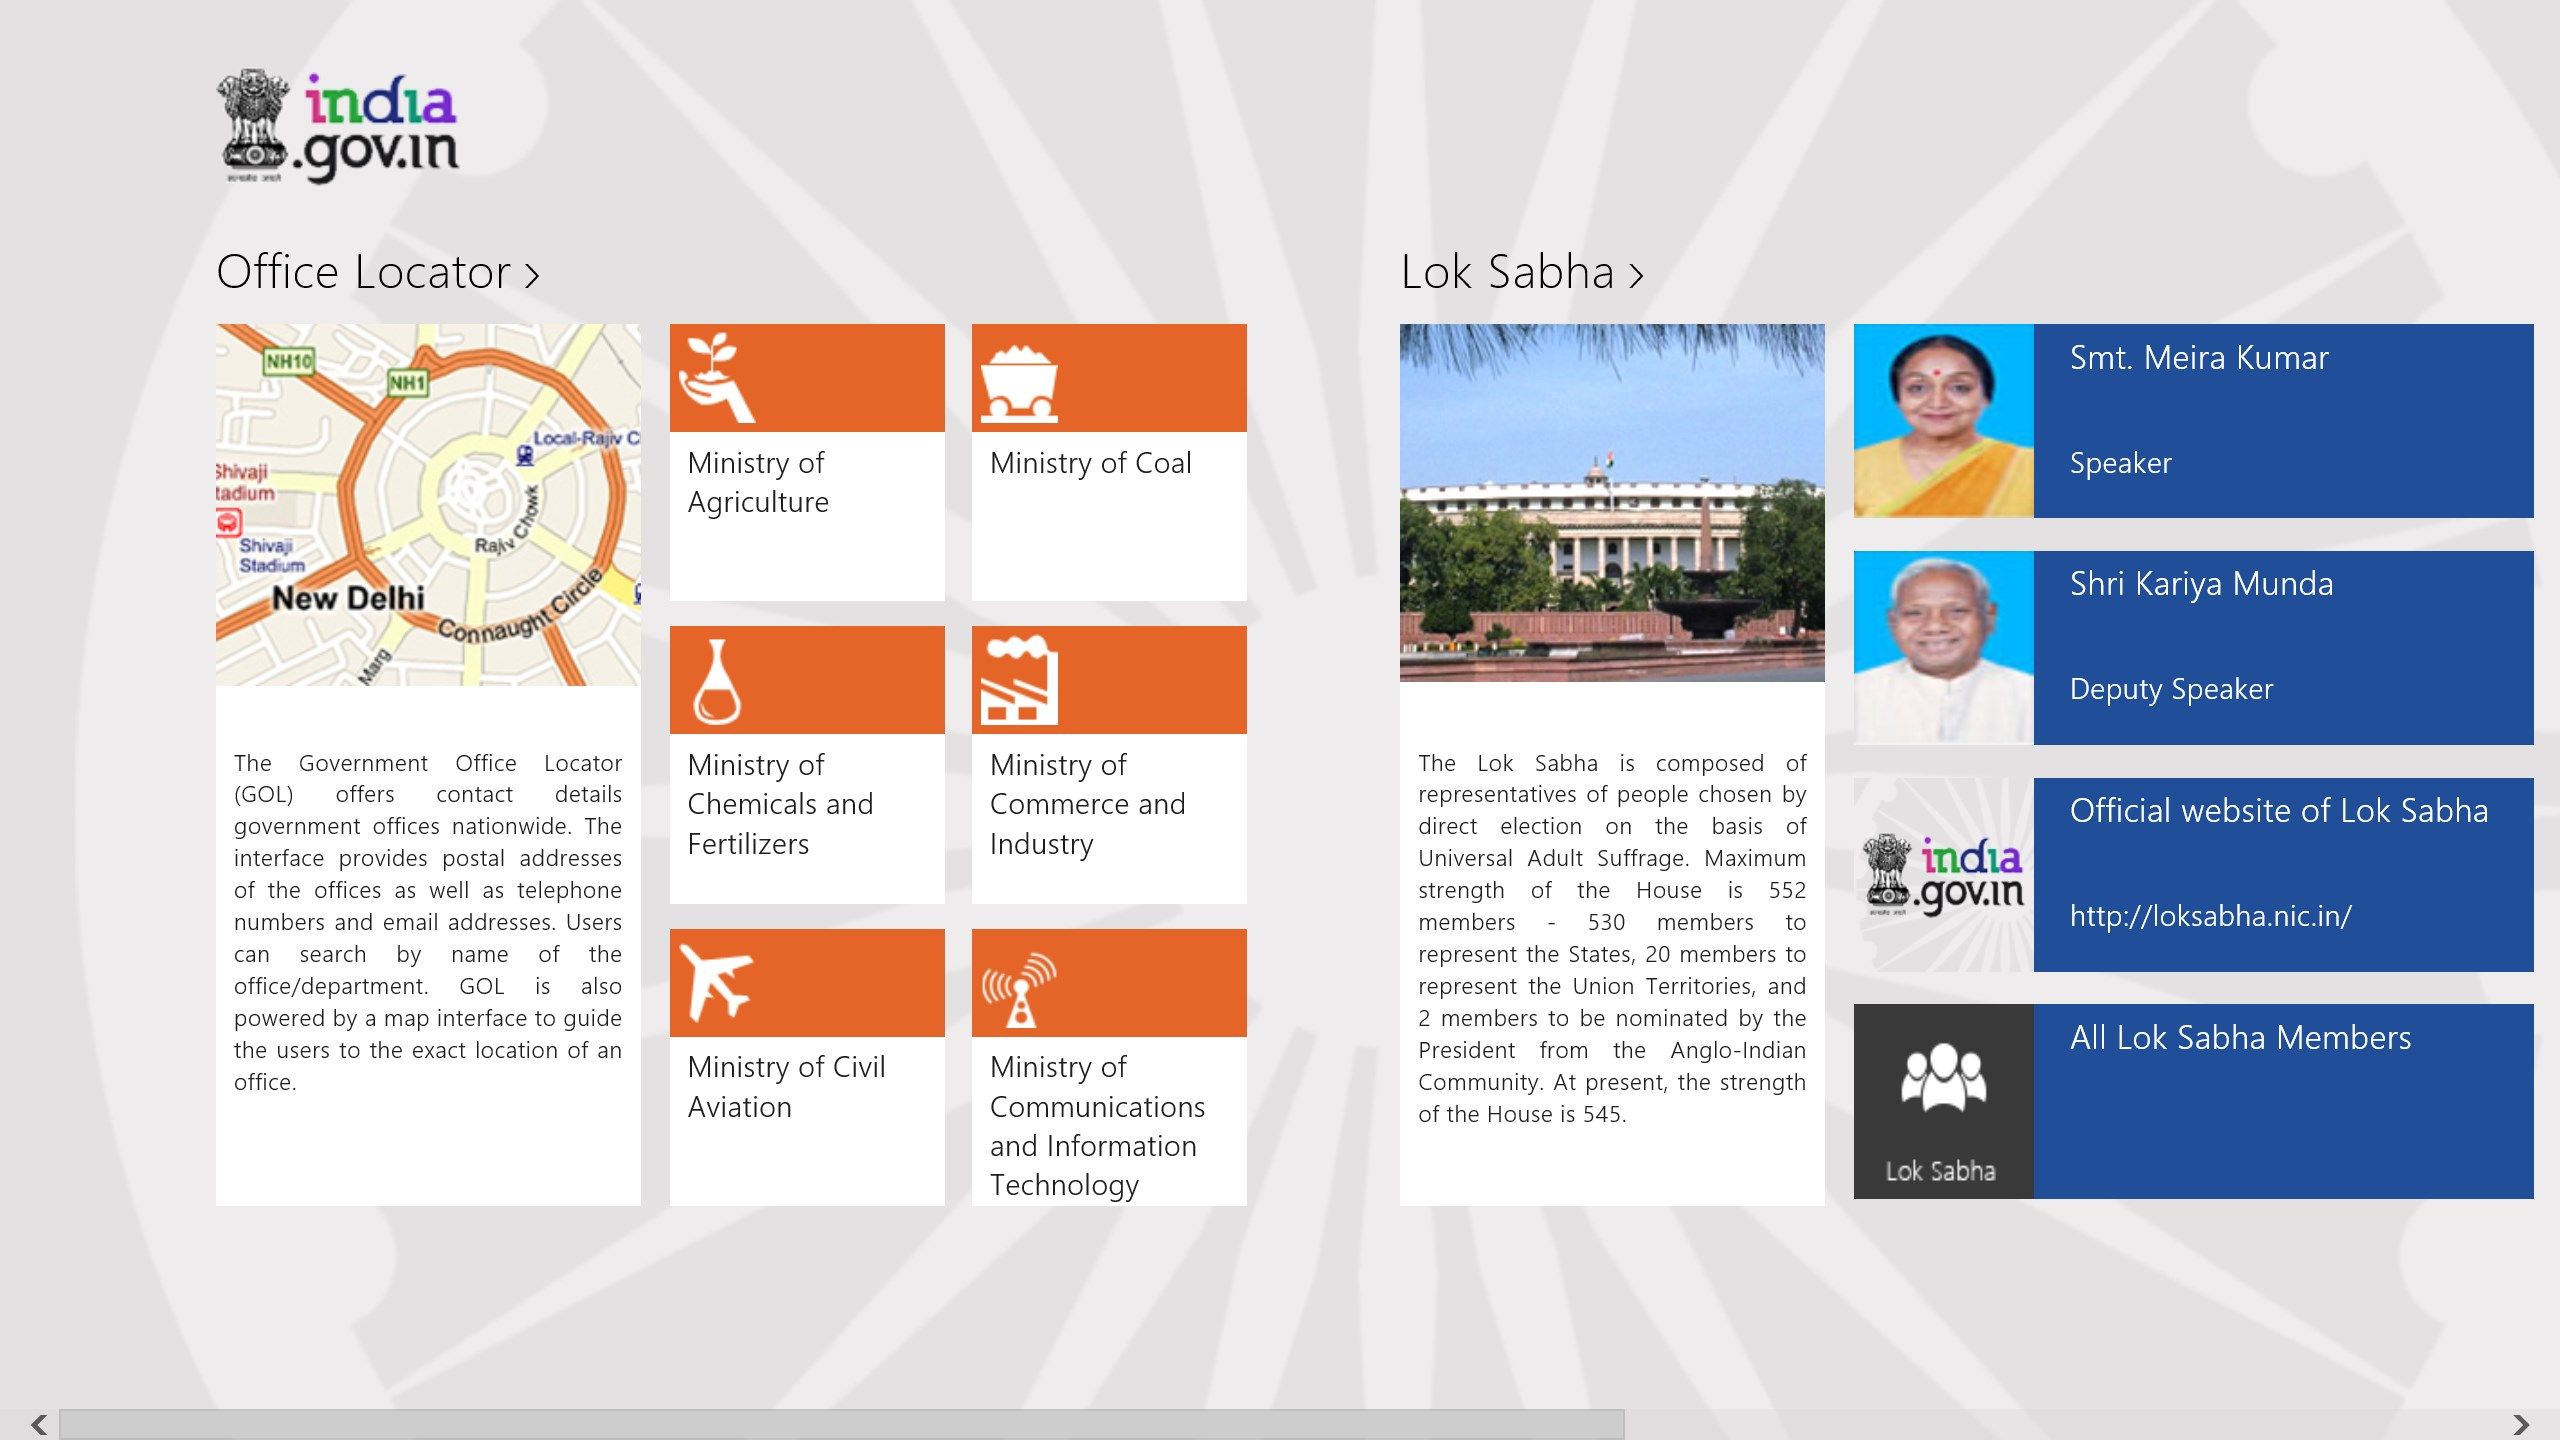 The main page shows Office Locator, Loksabha and Rajyasabha as you pan right